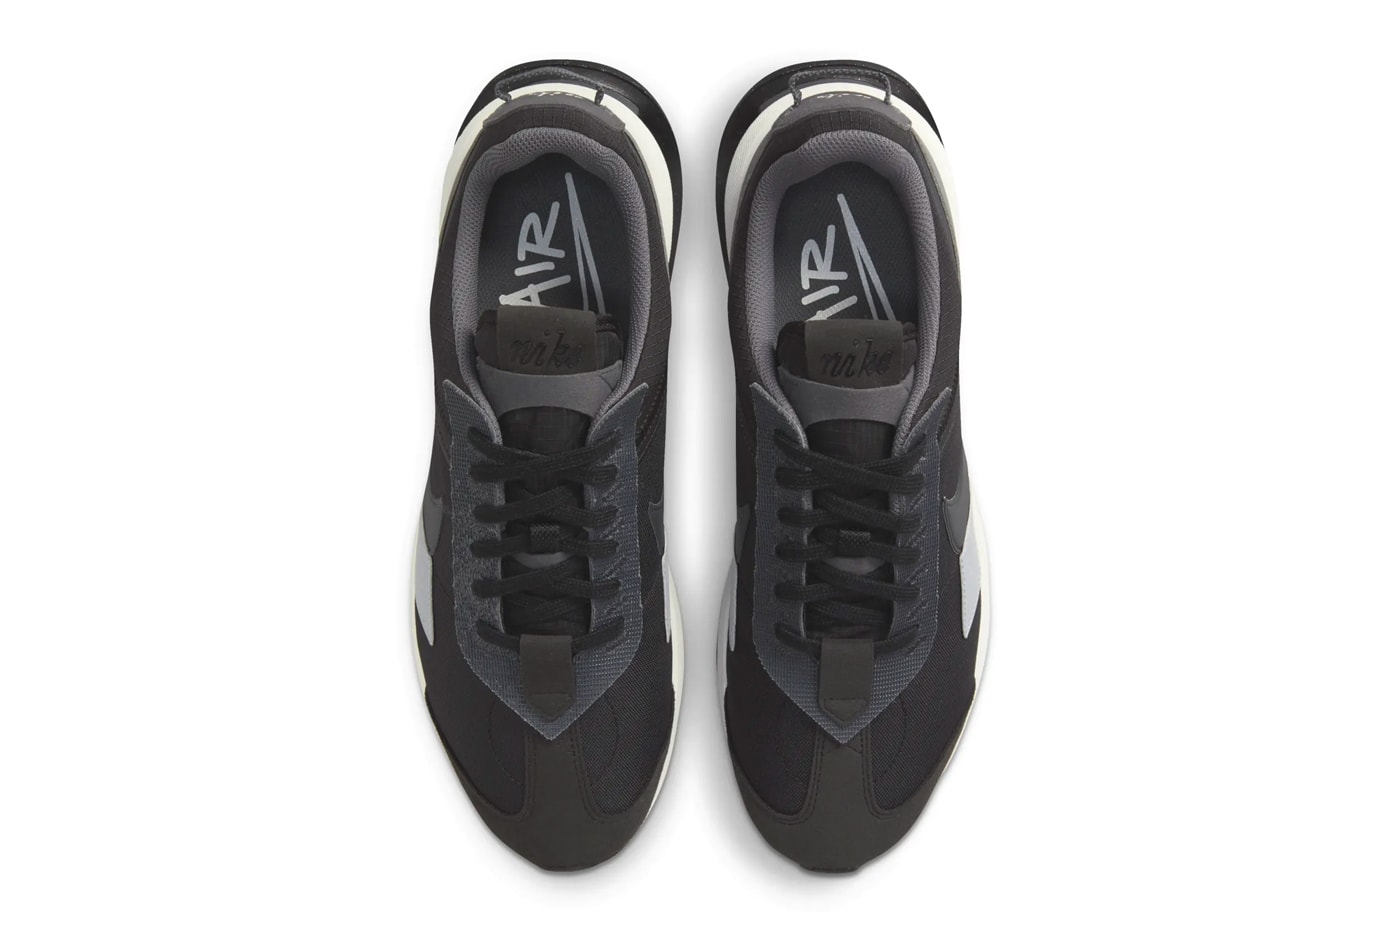 nike air max pre day black da4263 001 menswear streetwear kicks shoes trainers runners spring summer 2021 ss21 collection info